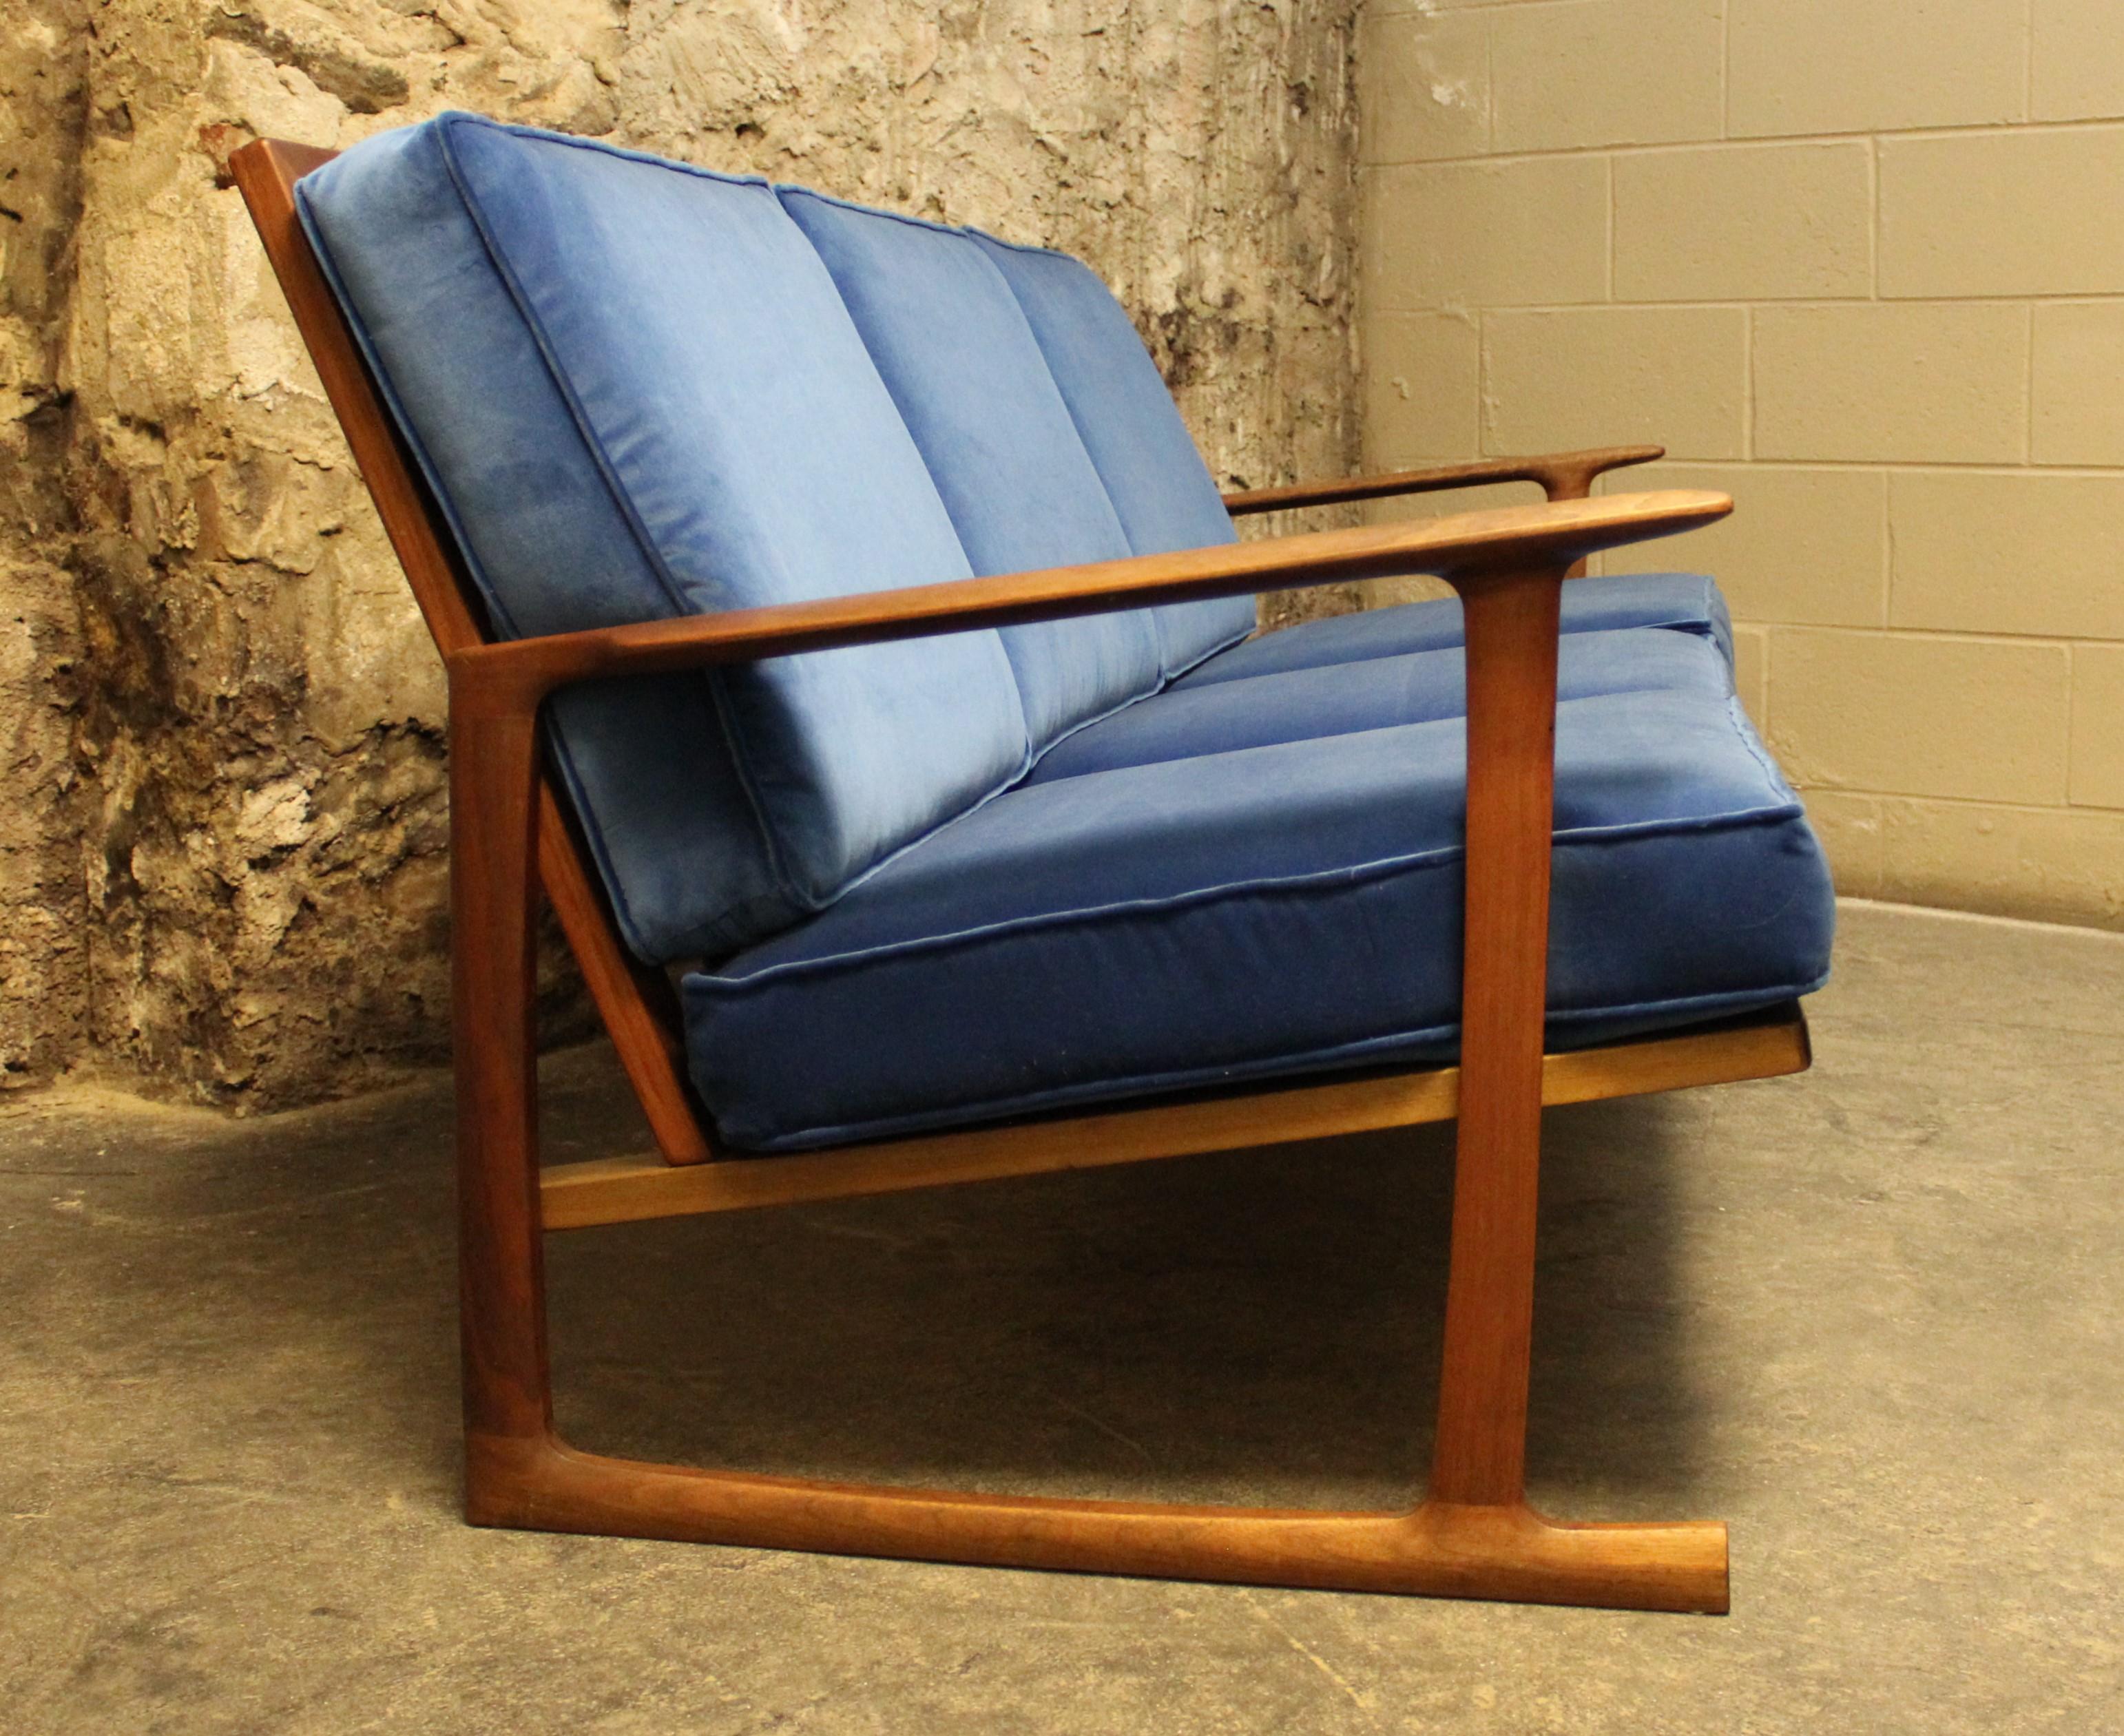 Danish teak sofa by Ib Kofod-Larsen for Selig. Teak frame with sled base. Beautifully executed sofa with ergonomic comfort built in. Recently refurbished and upholstered in blue velvet.

Mid-Century Modern / Scandinavian Modern.